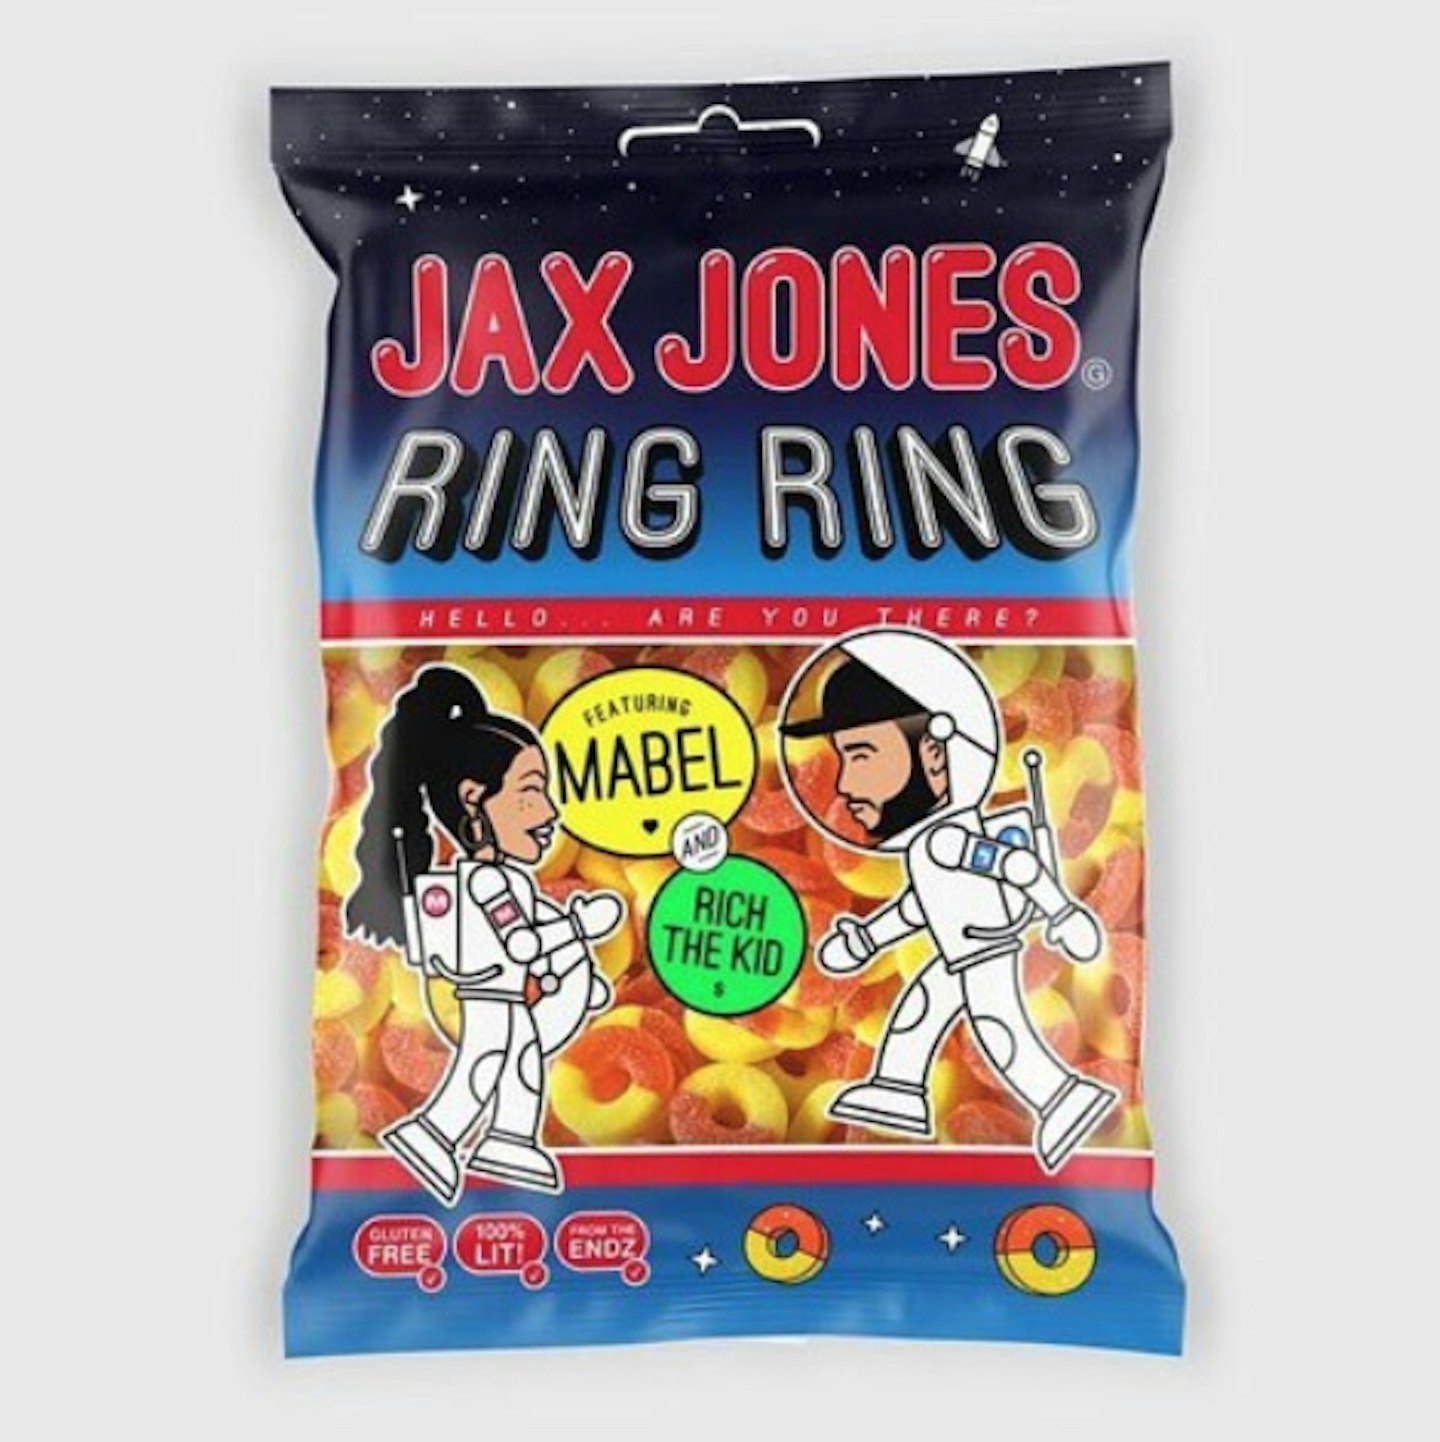 Jax Jones featuring Mabel